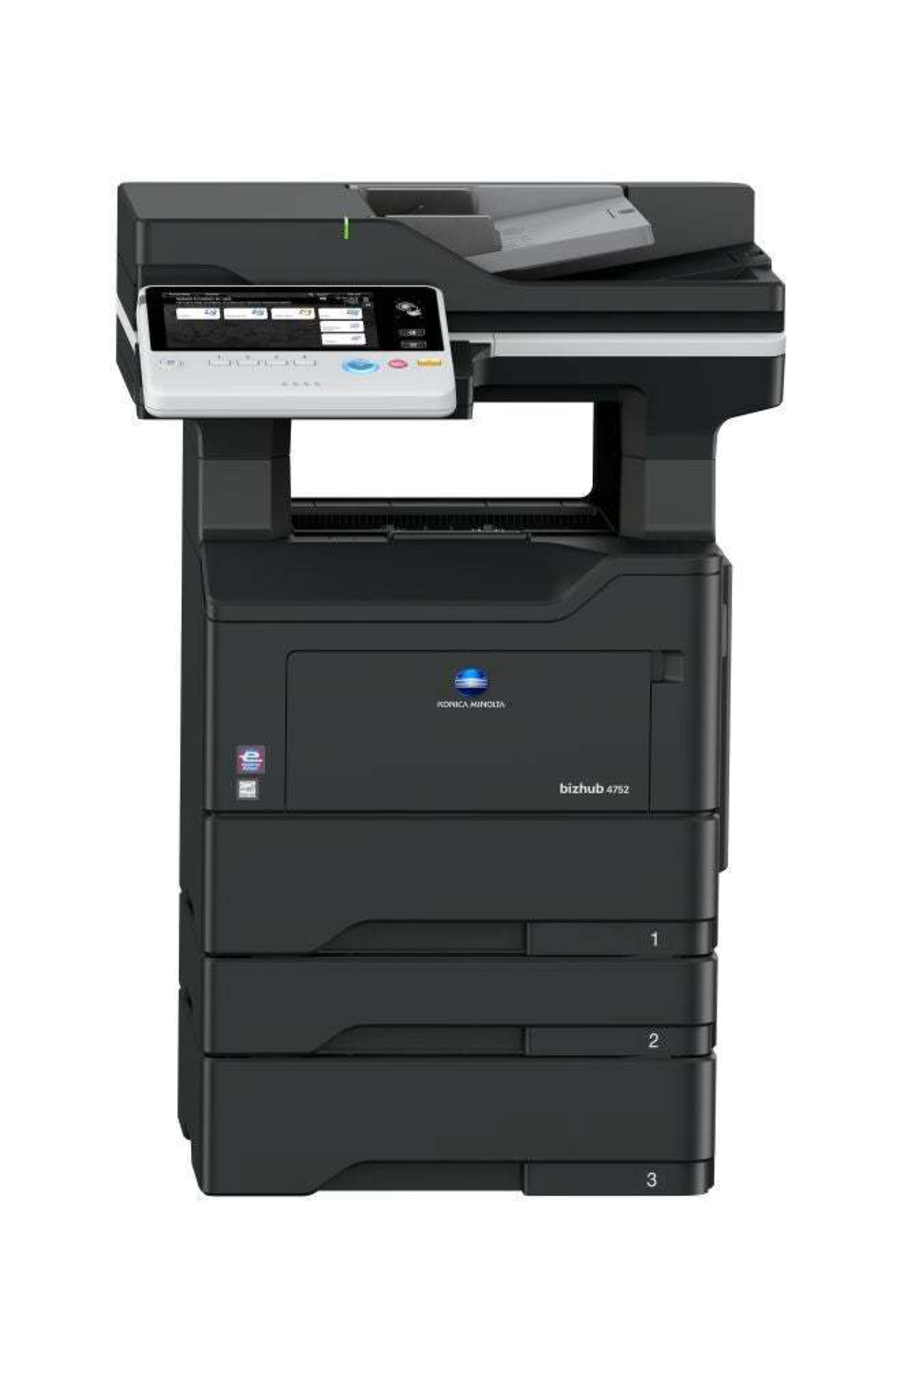 Konica Minolta bizhub 4752 office printer